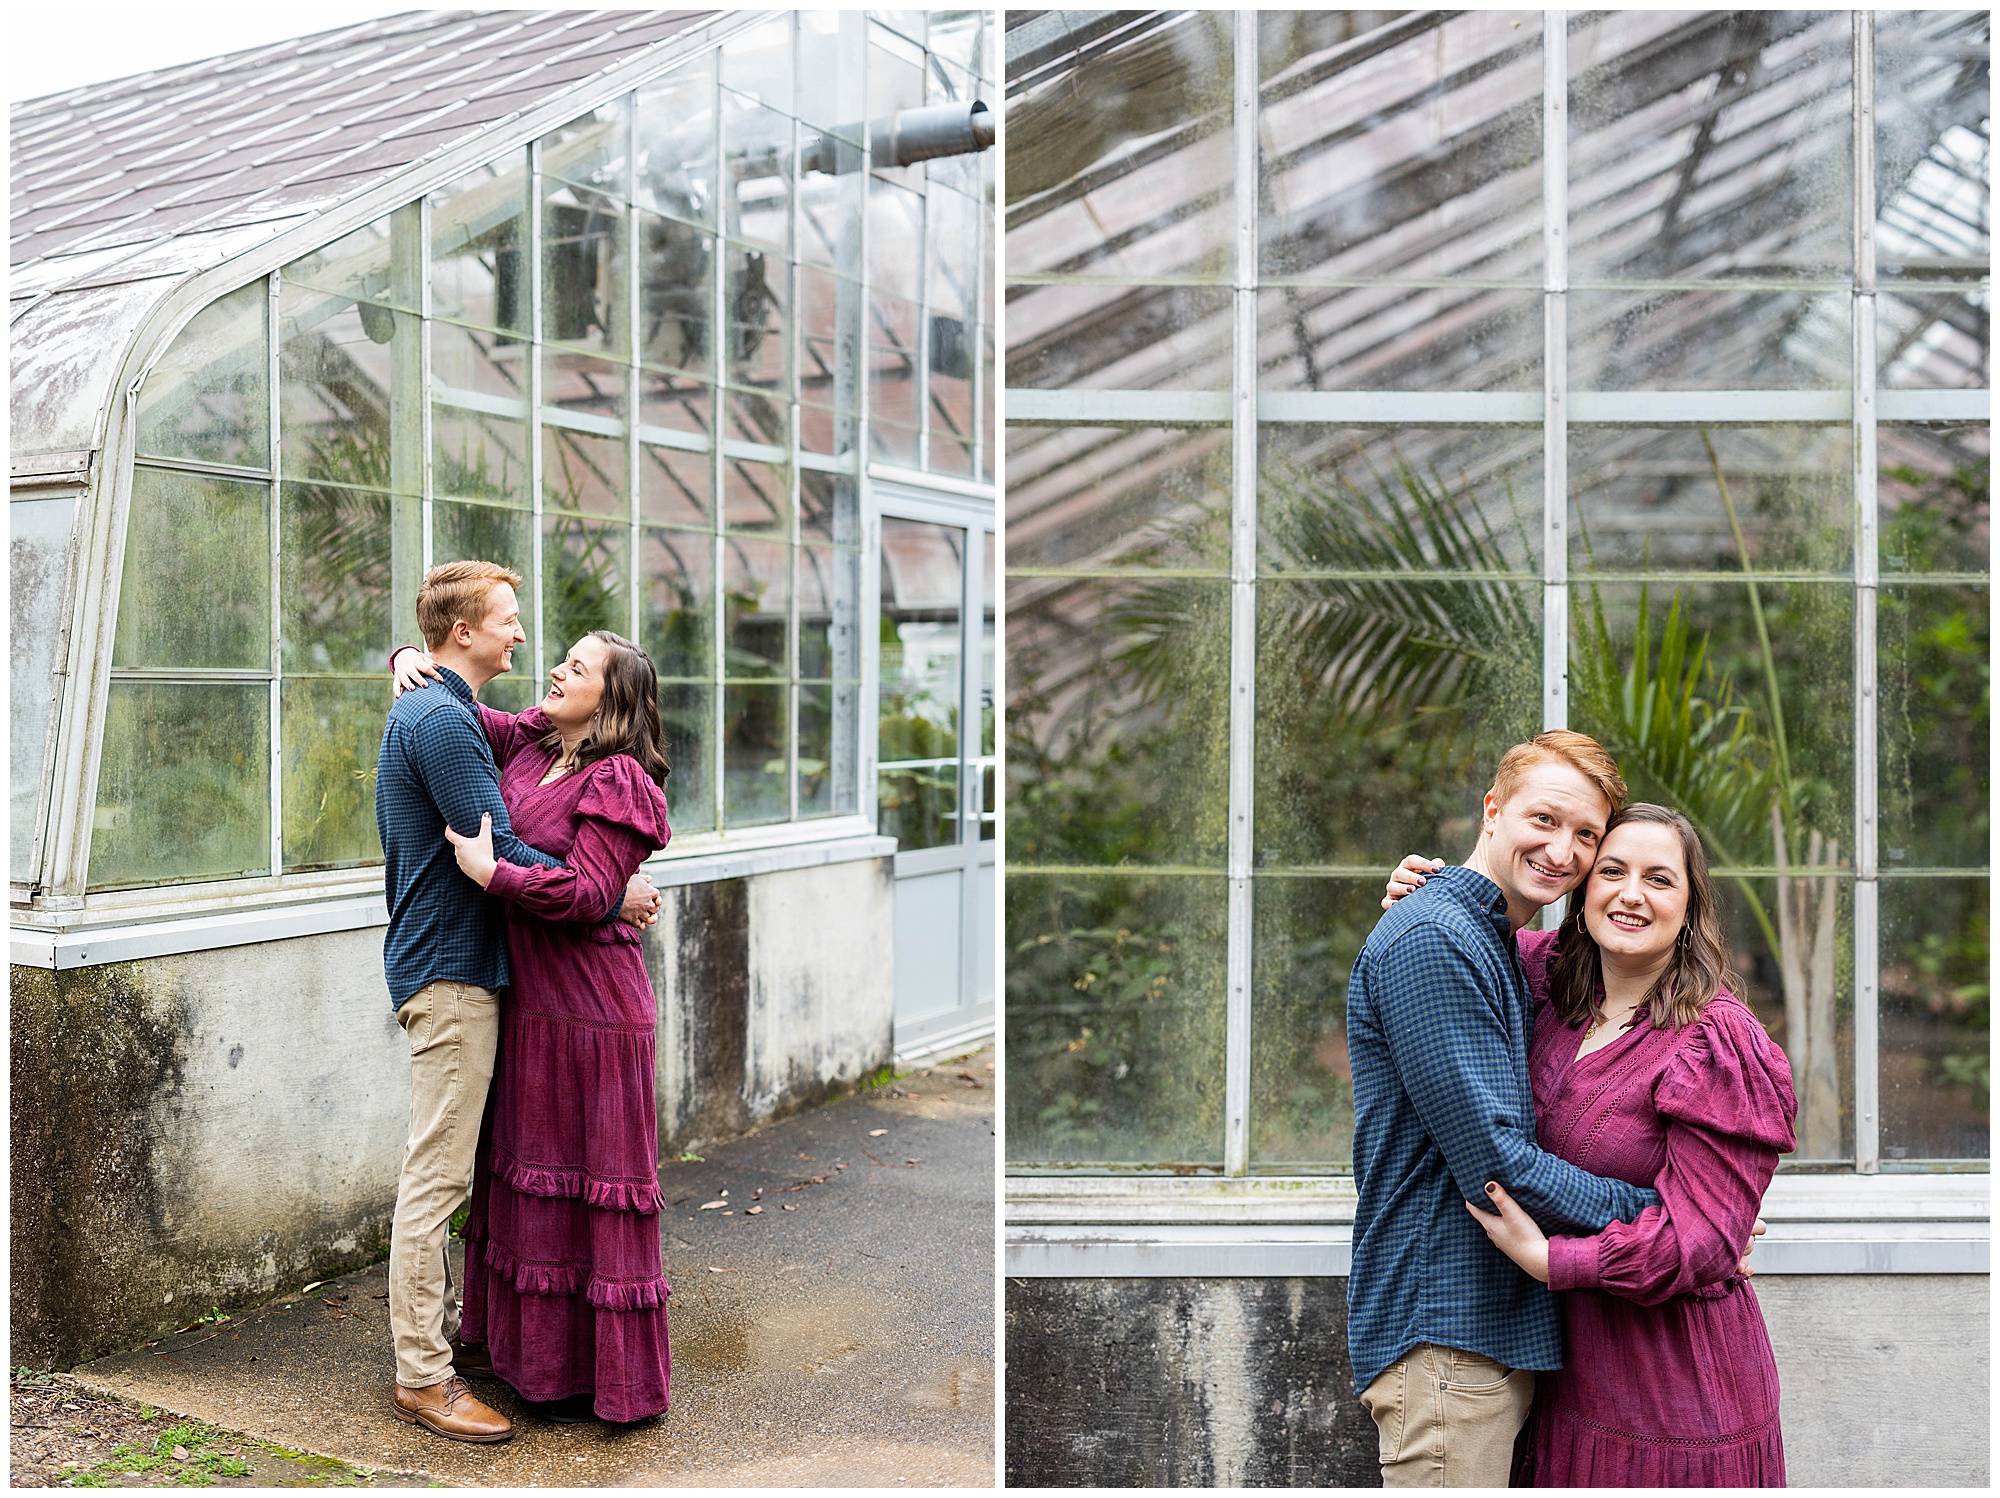 Eleanor Stenner Photography - a Birmingham, Alabama Wedding Photographer - photographed the future Codobas at the Birmingham Botanical Gardens